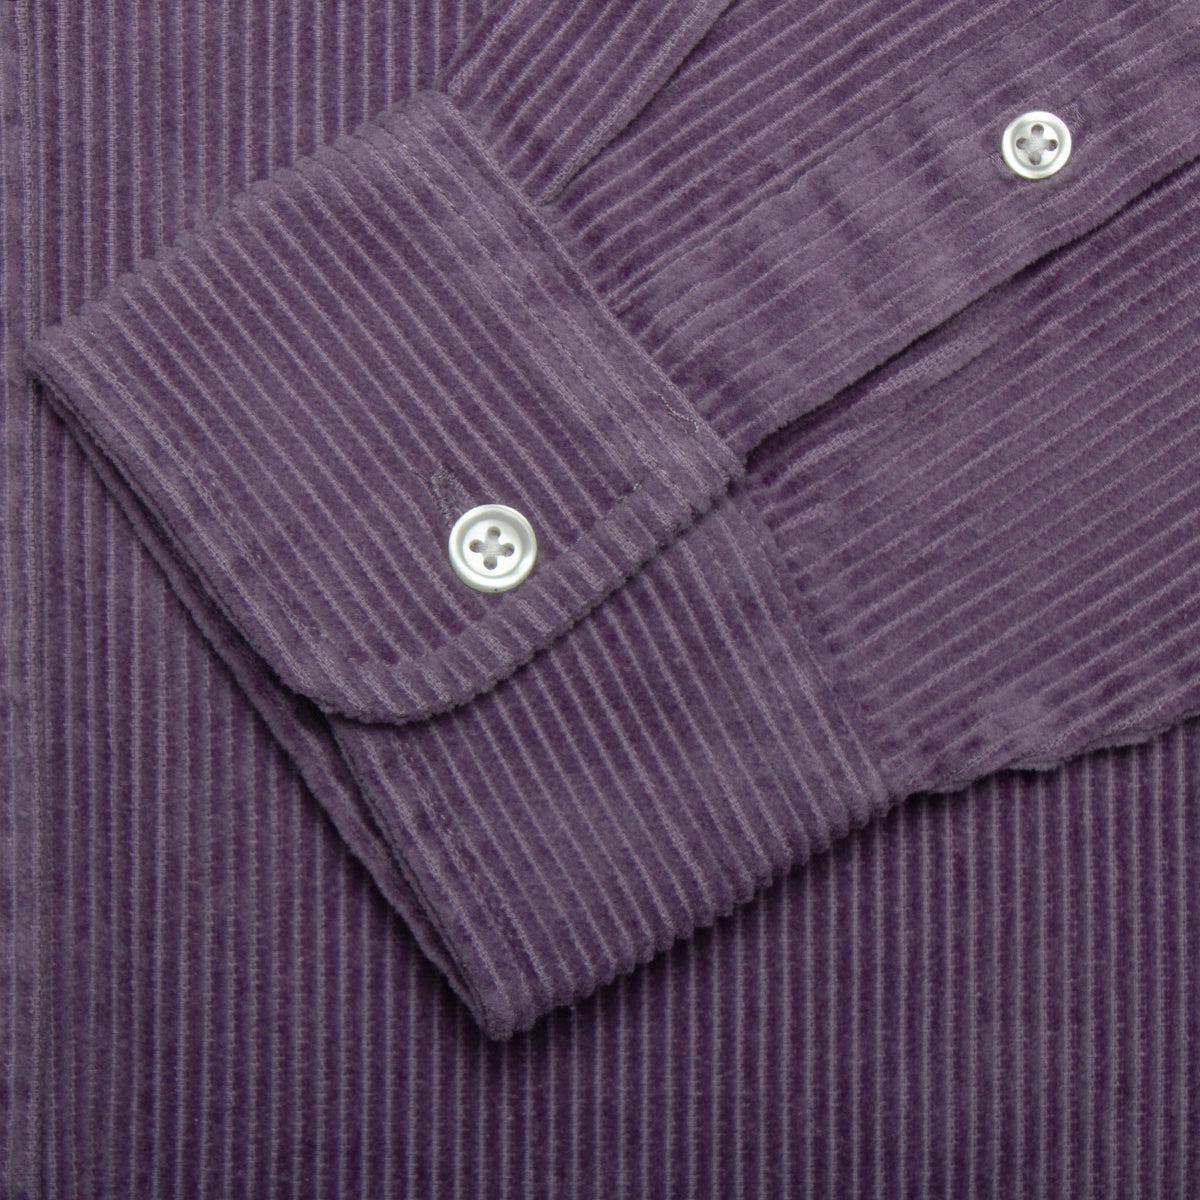 Carhartt WIP | L/S Madison Cord Shirt Style # I029958-1QU Color : Glassy Purple / Black